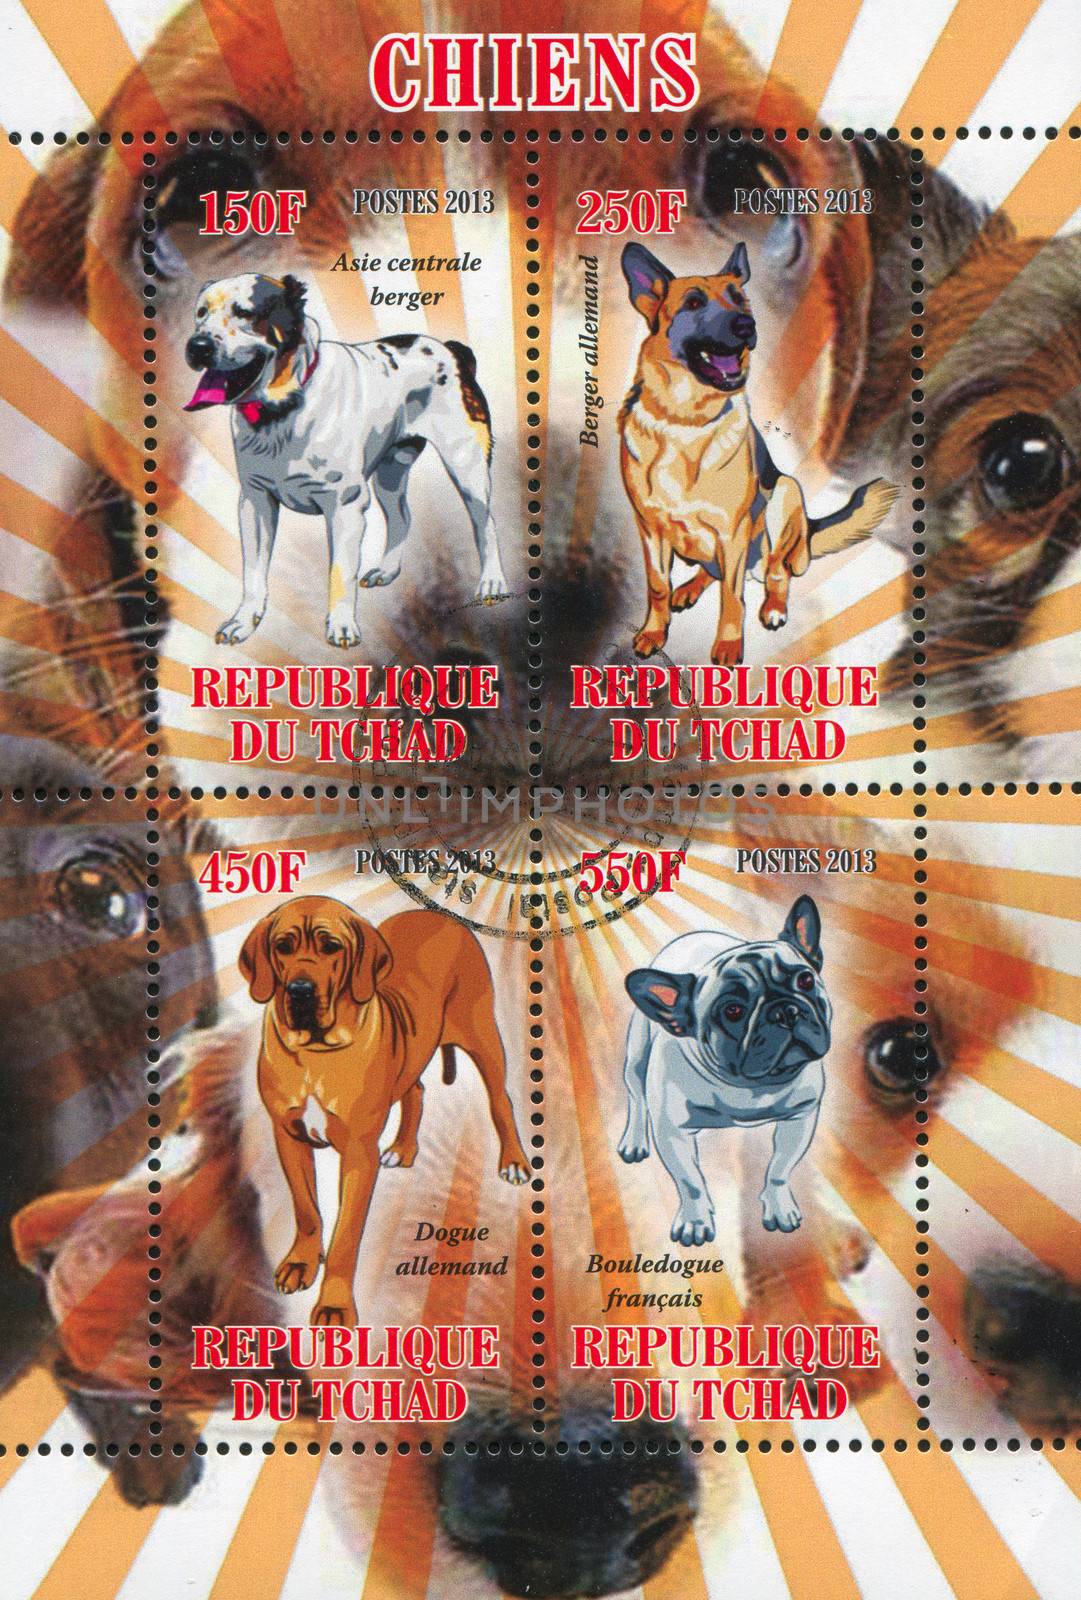 CHAD - CIRCA 2013: stamp printed by Chad, shows dog, circa 2013